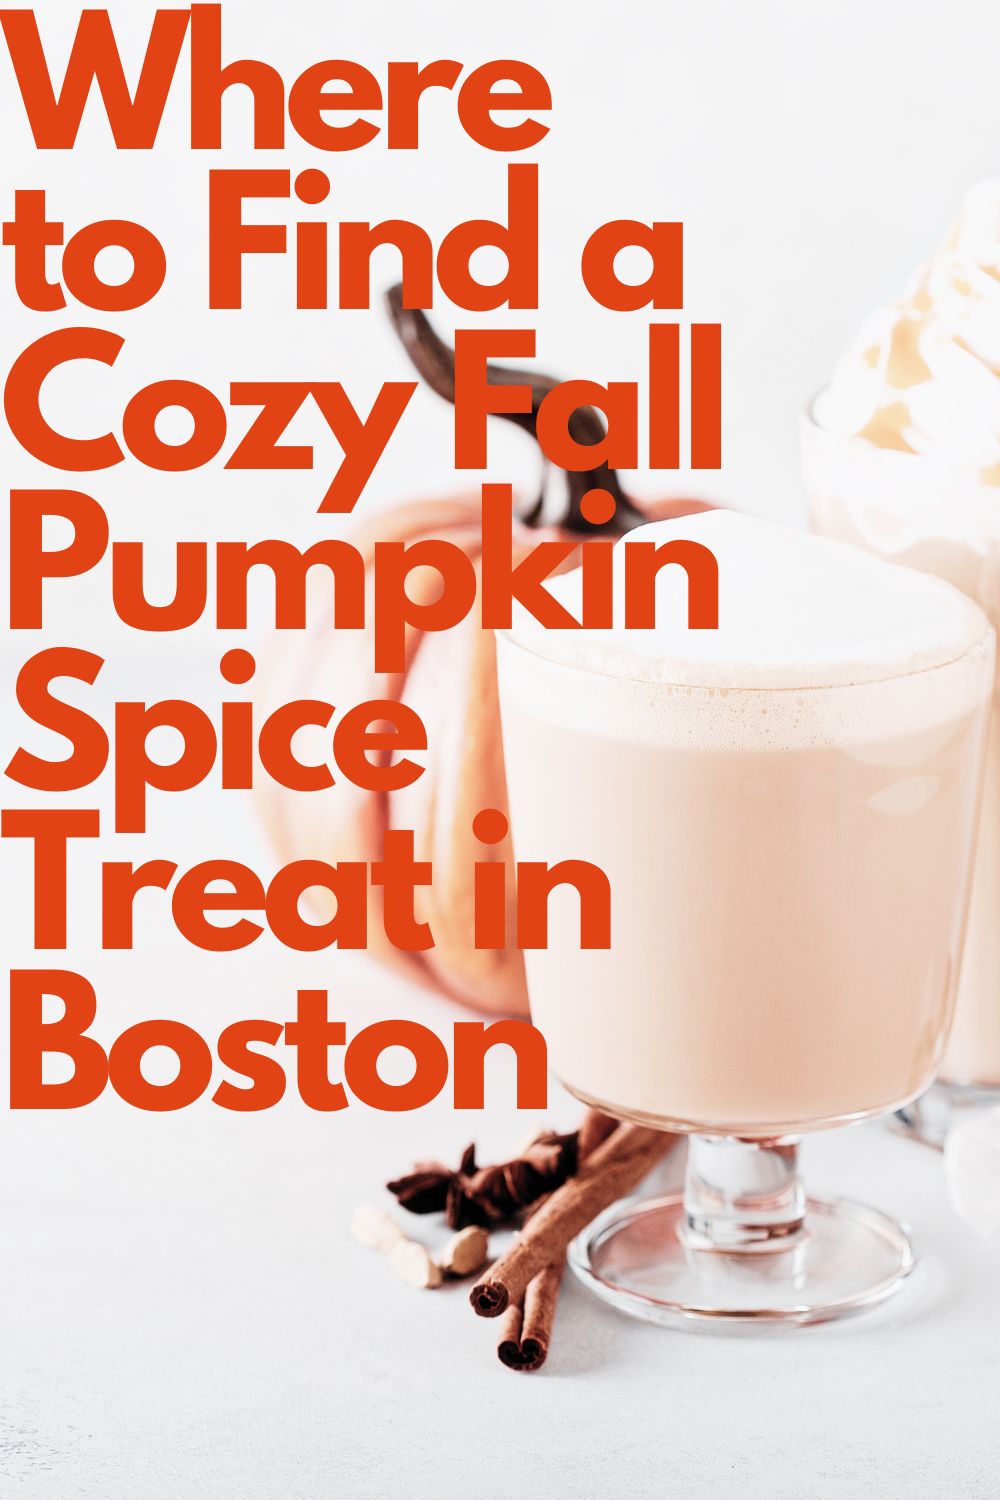 Where to Find a Cozy Fall Pumpkin Spice Treat in Boston